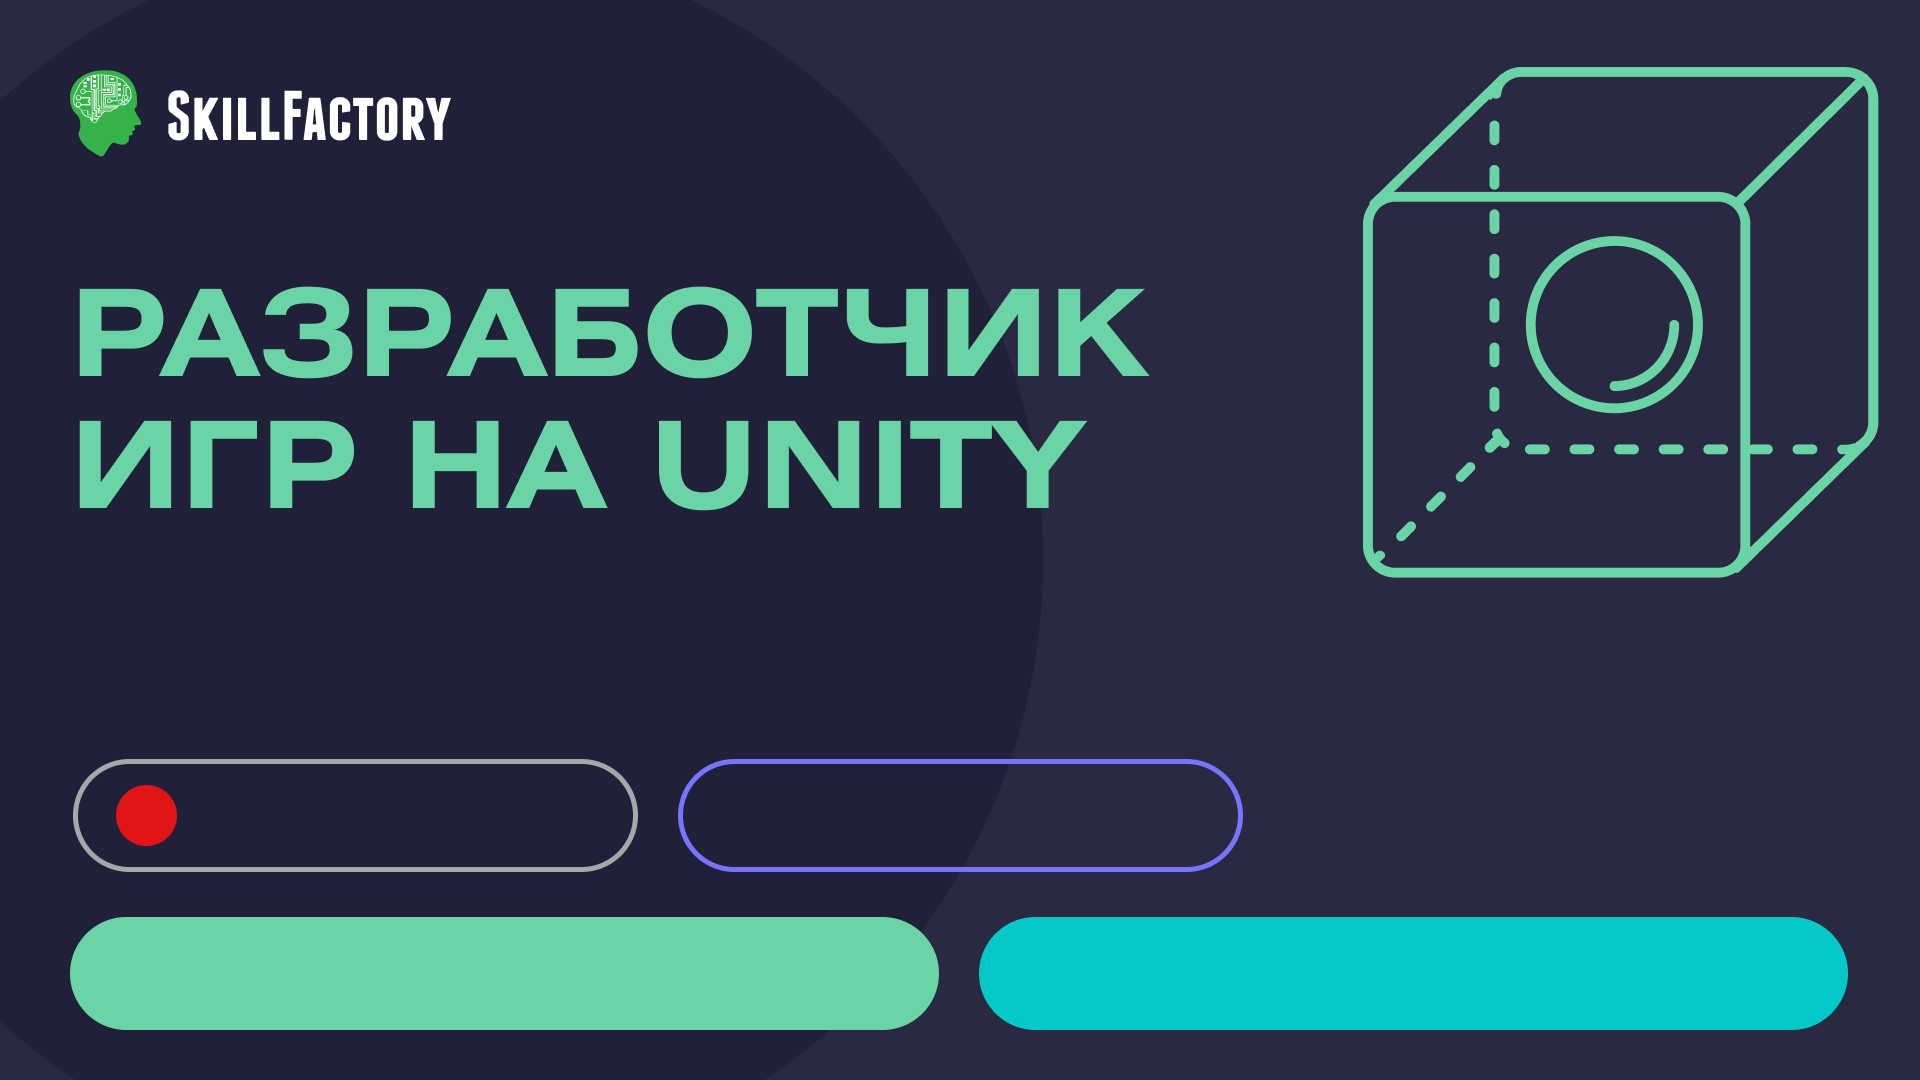 Разработчик игр на Unity